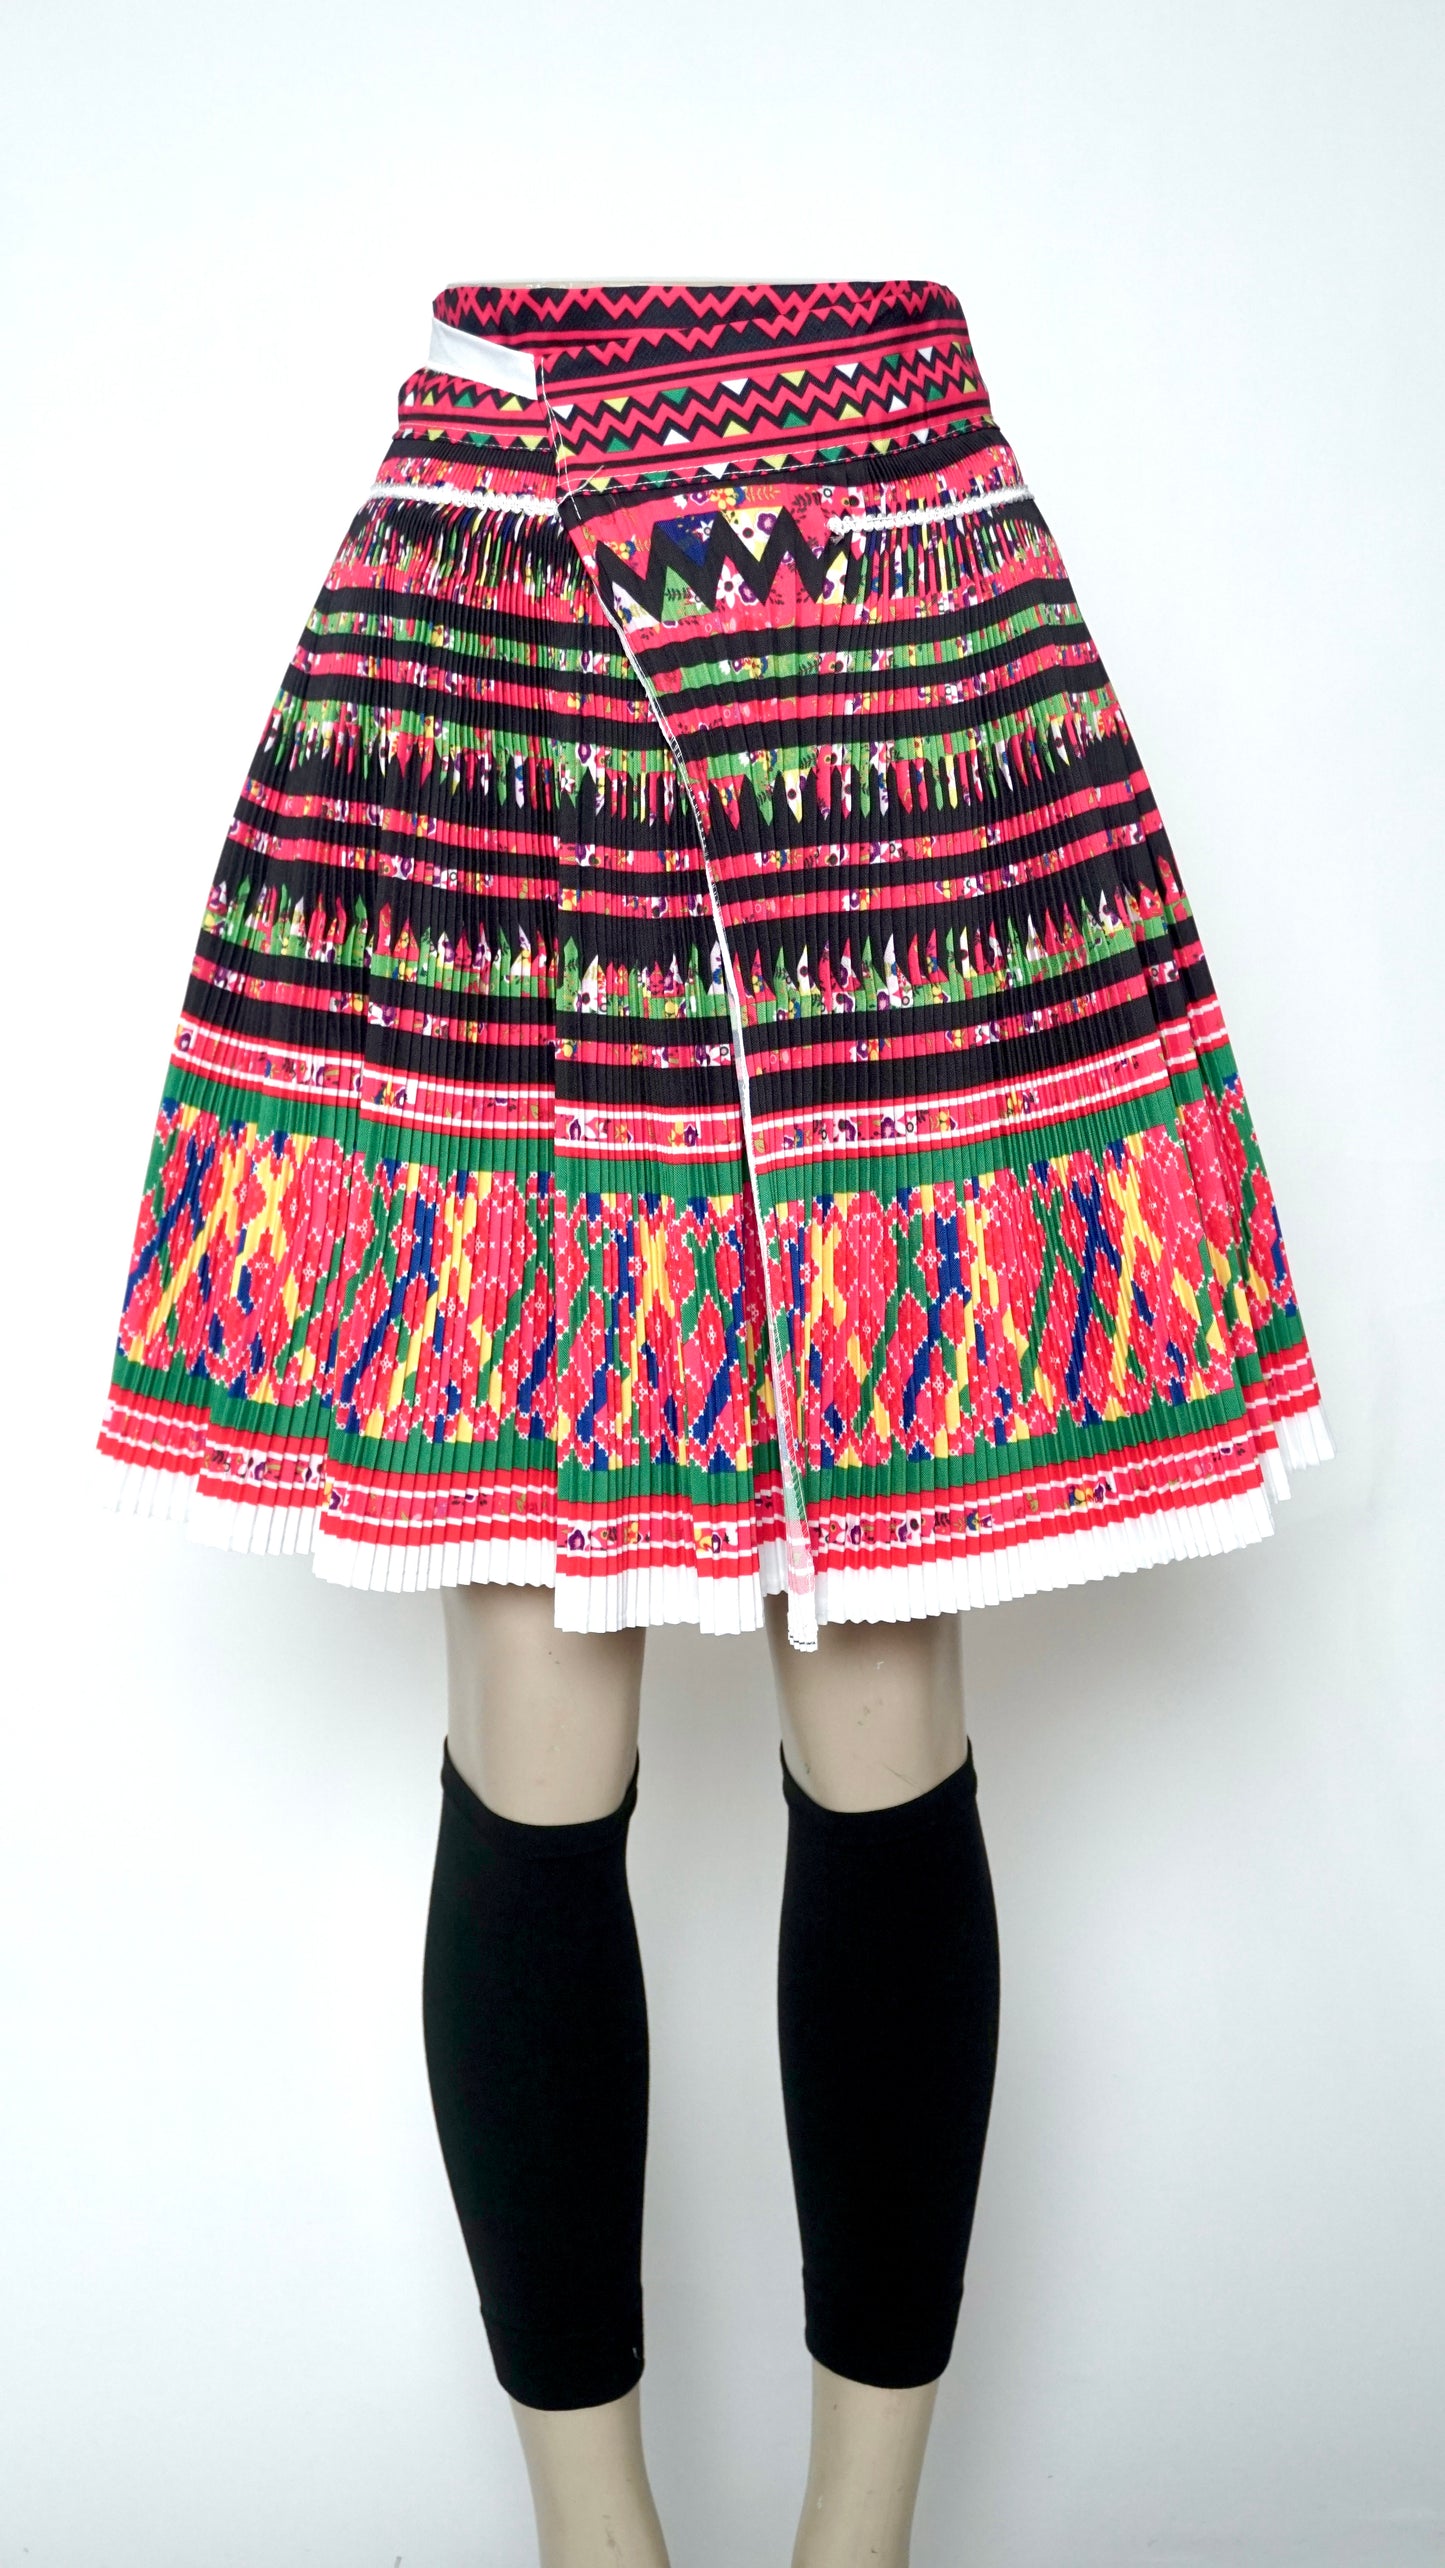 Printed X Floral Patterns Skirt